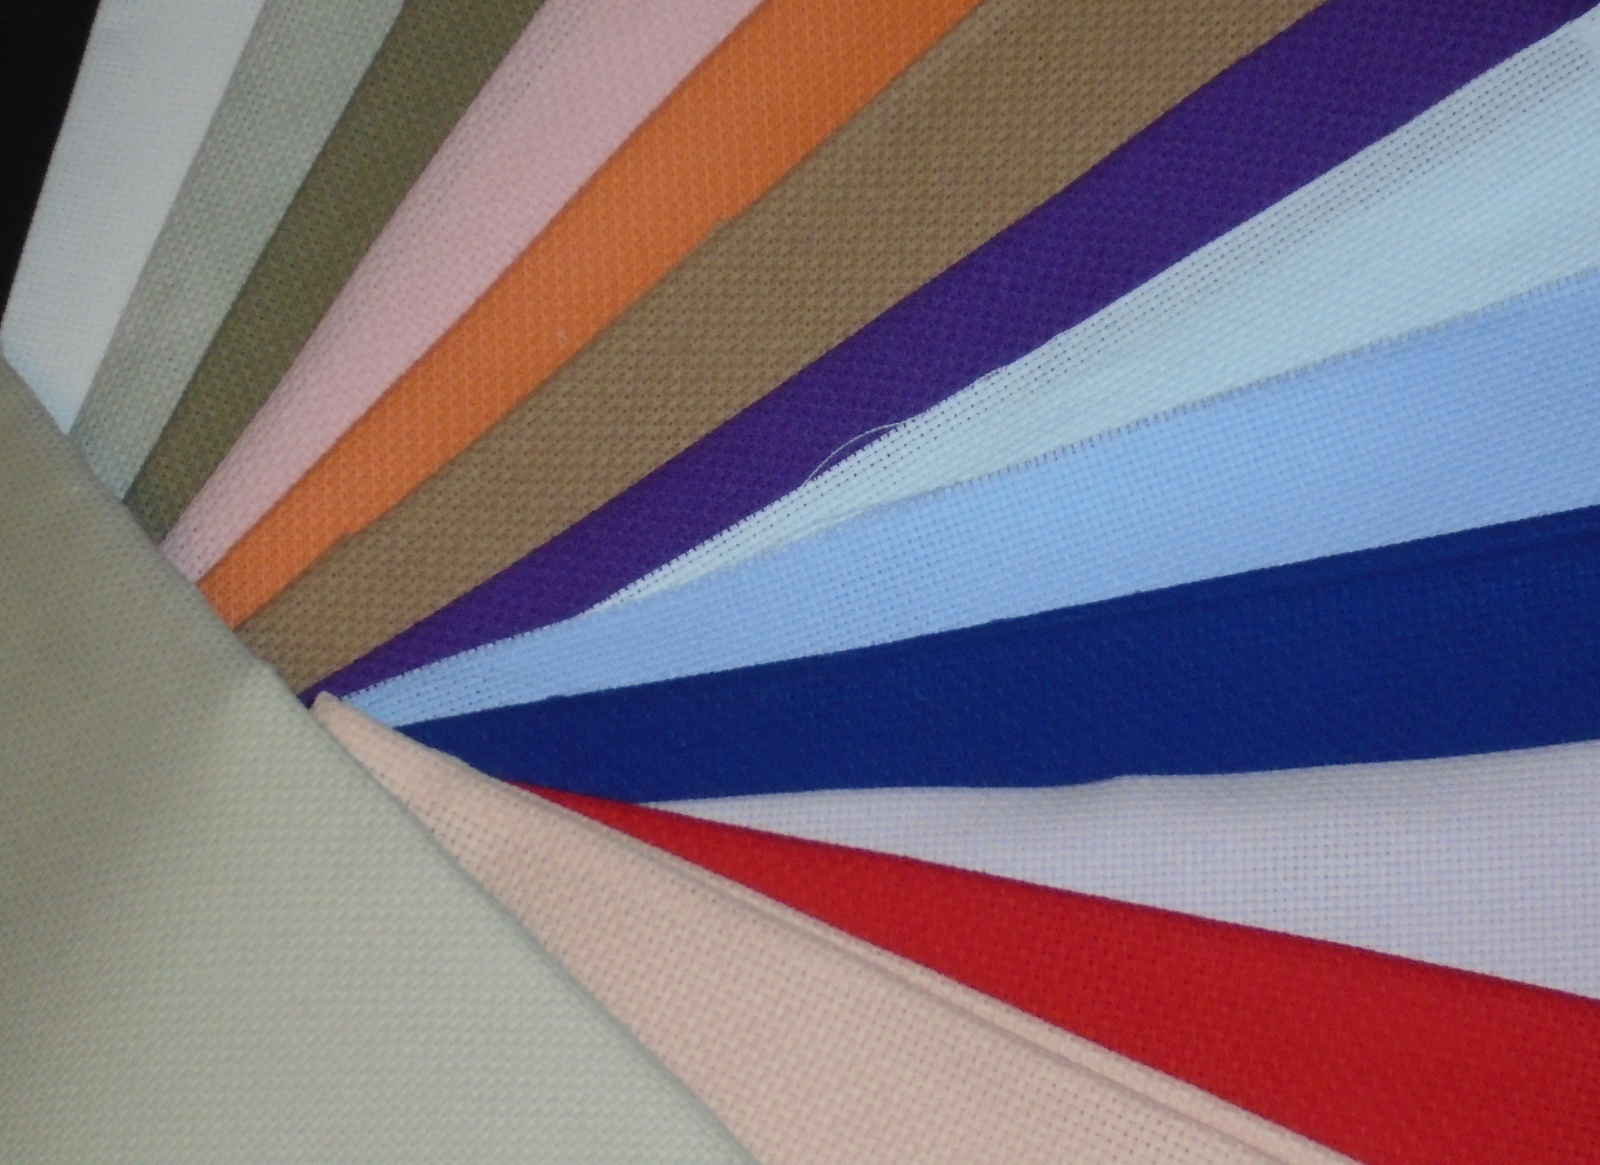 Wichelt Aida Fabric For Cross Stitch 11, 14, 16, 20 Count Choose Color, Quantity